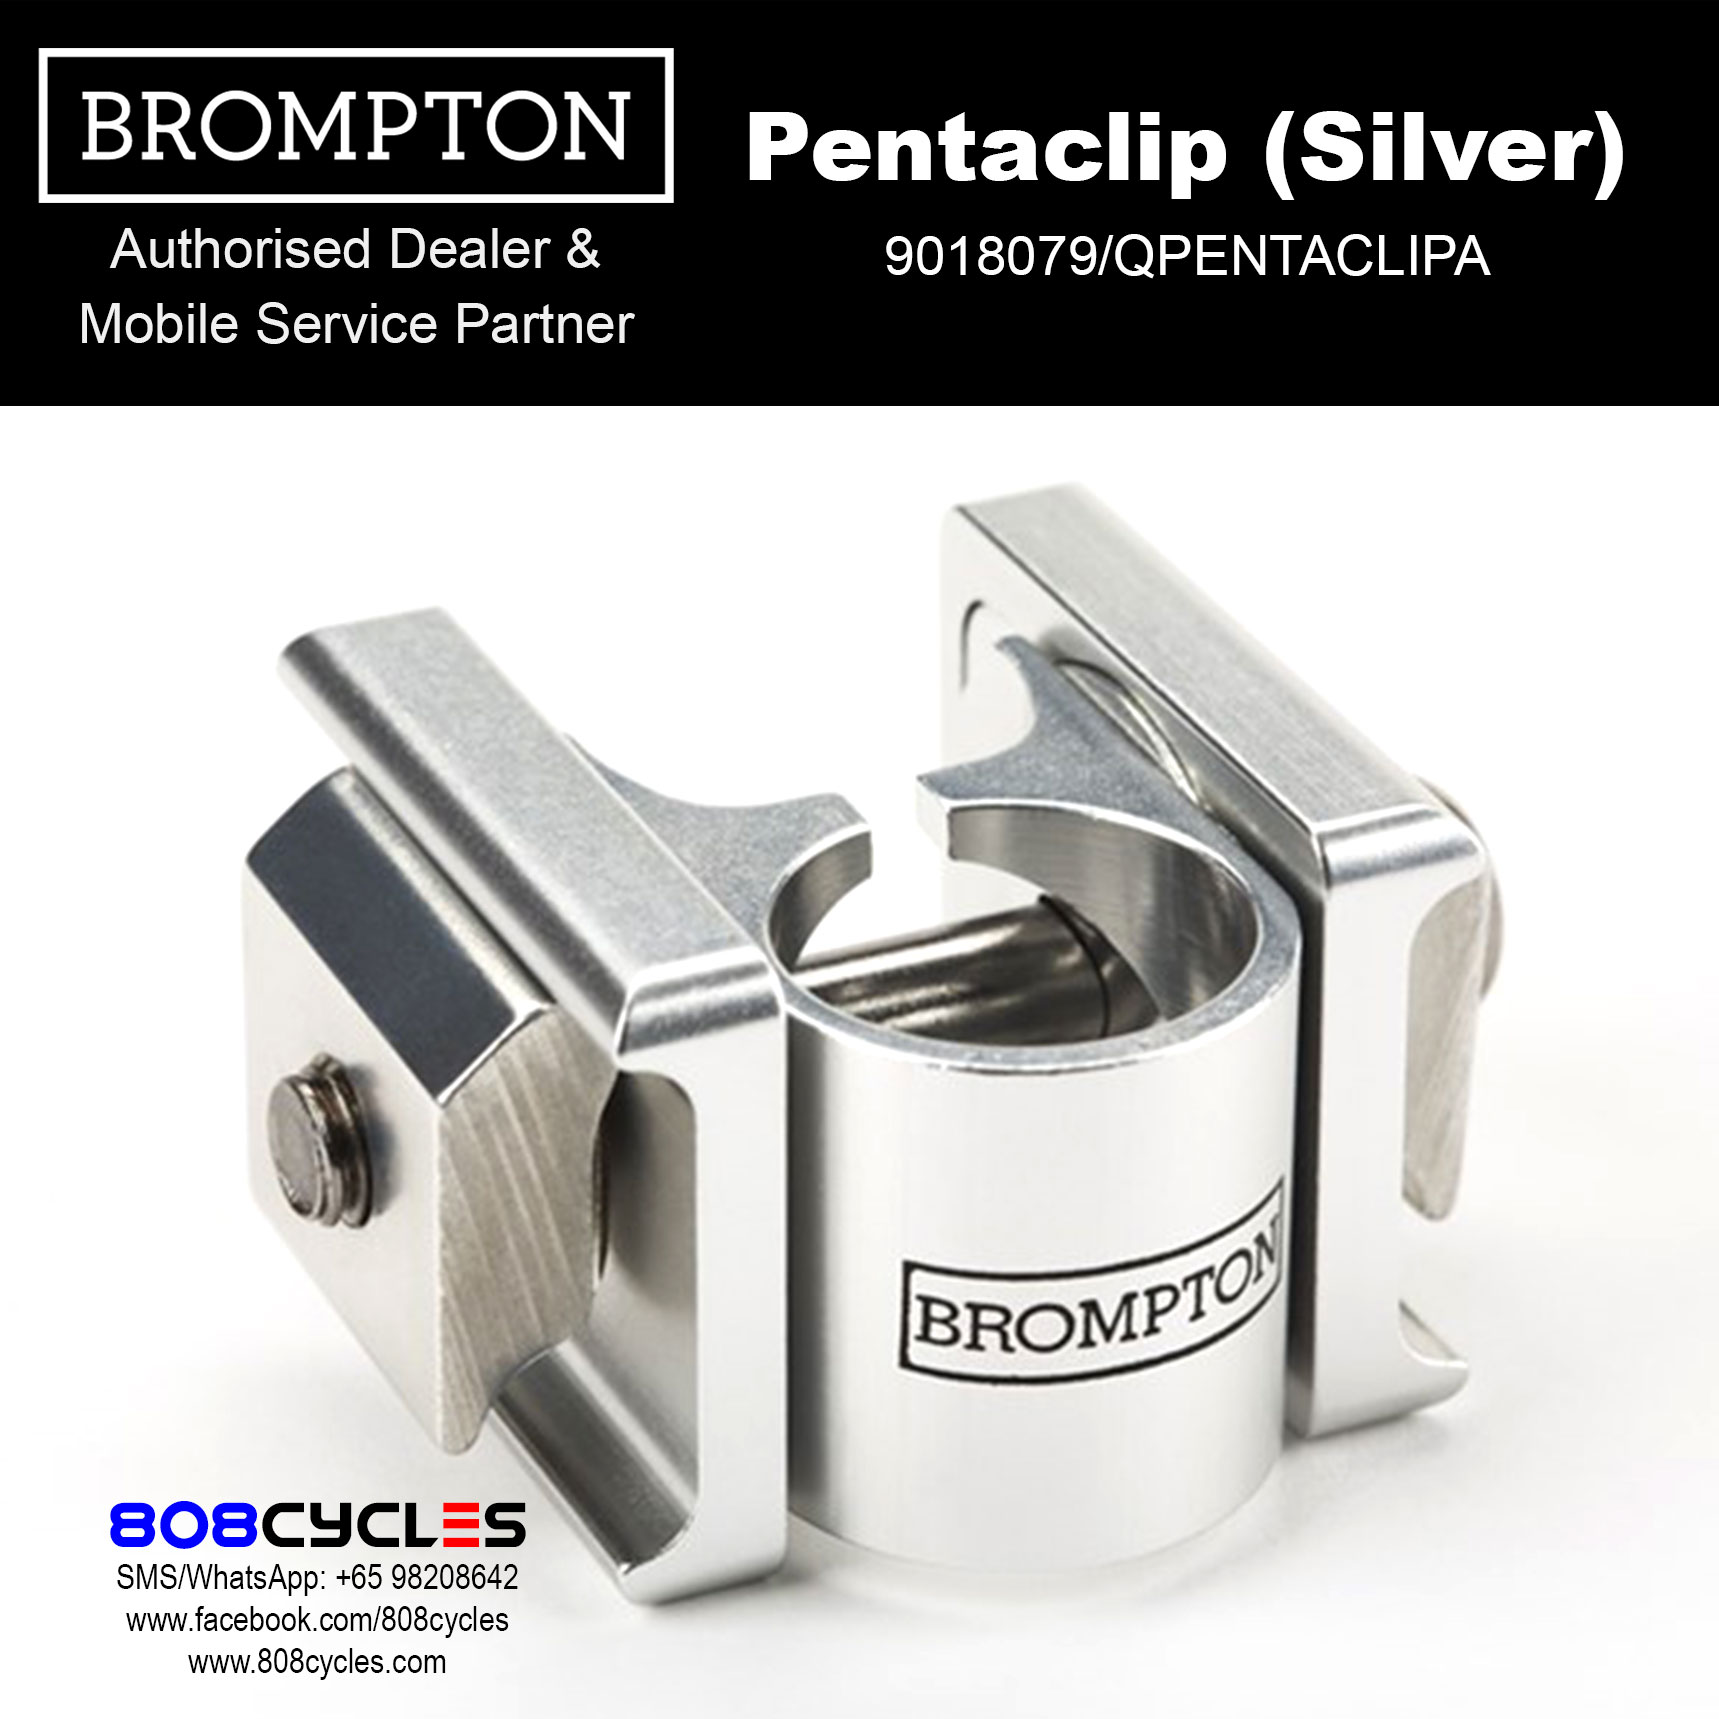 BROMPTON Pentaclip (Black or Silver)